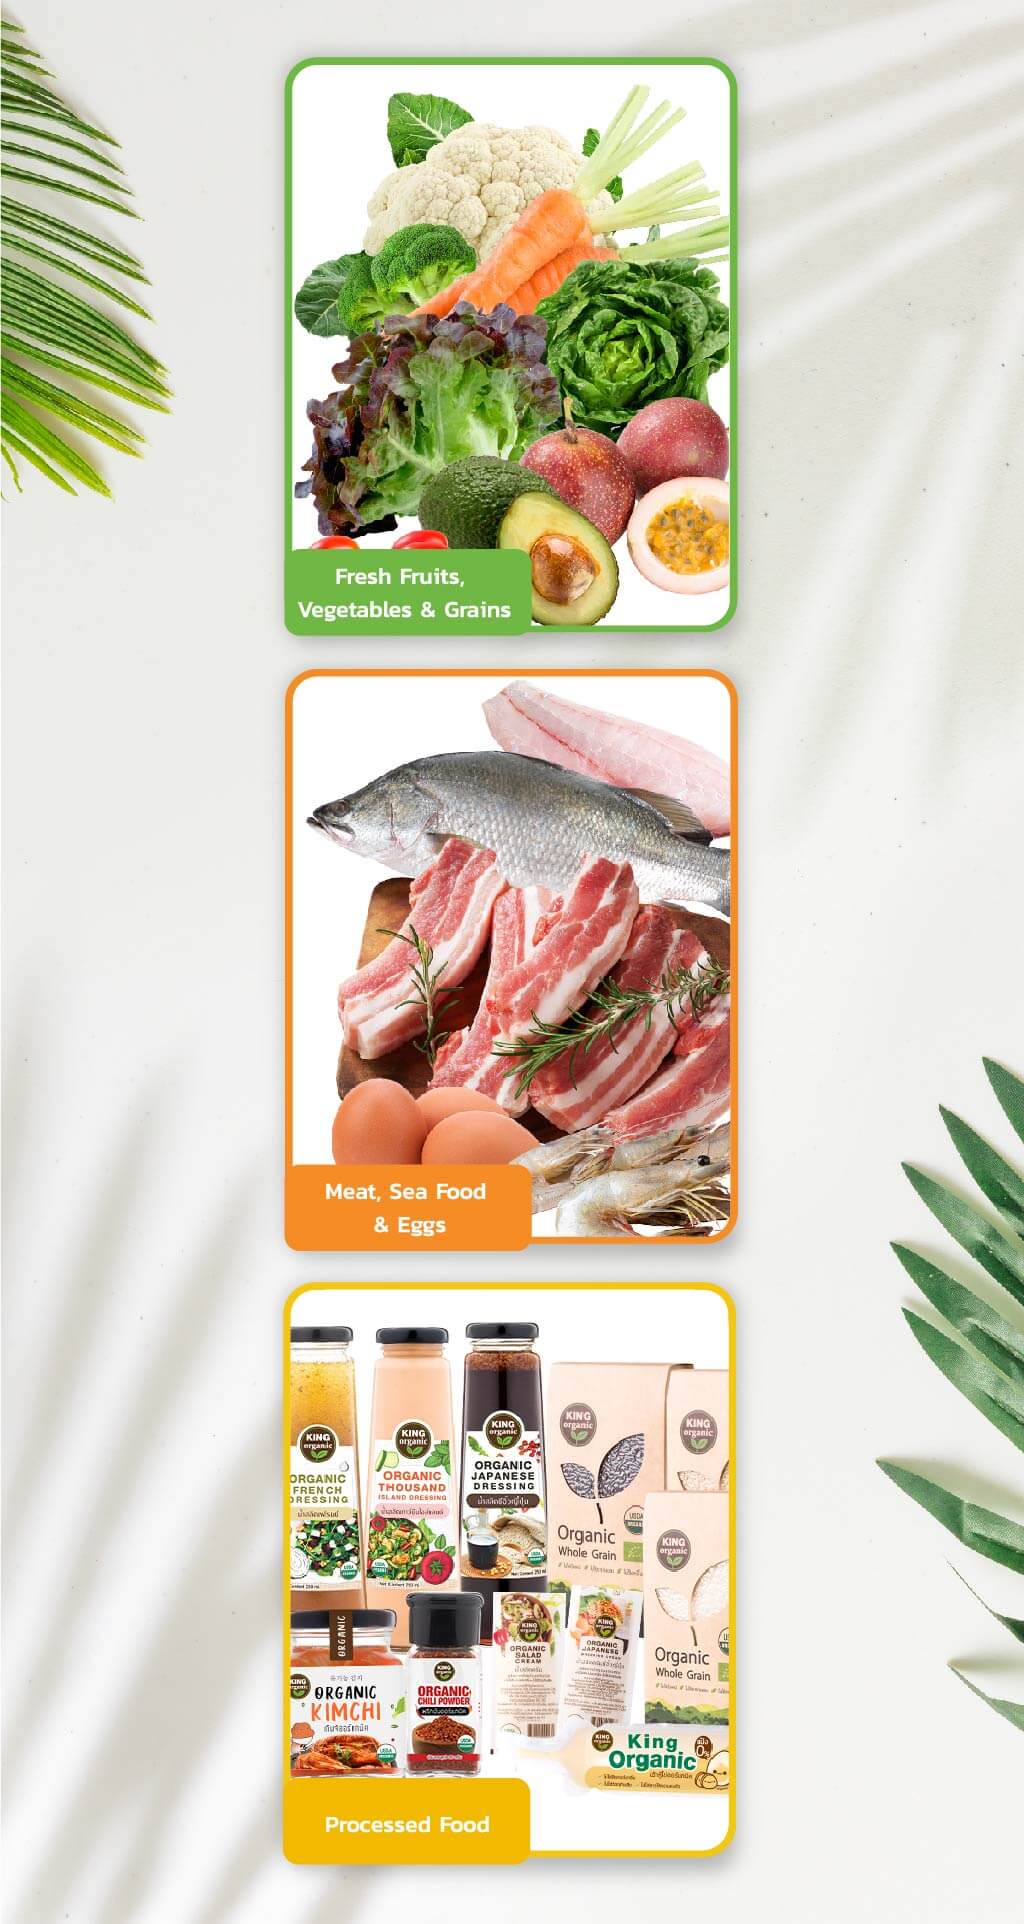 Fresh Fruits, Vegetables & Grains, Meat, Sea Food & Eggs, Processed Food